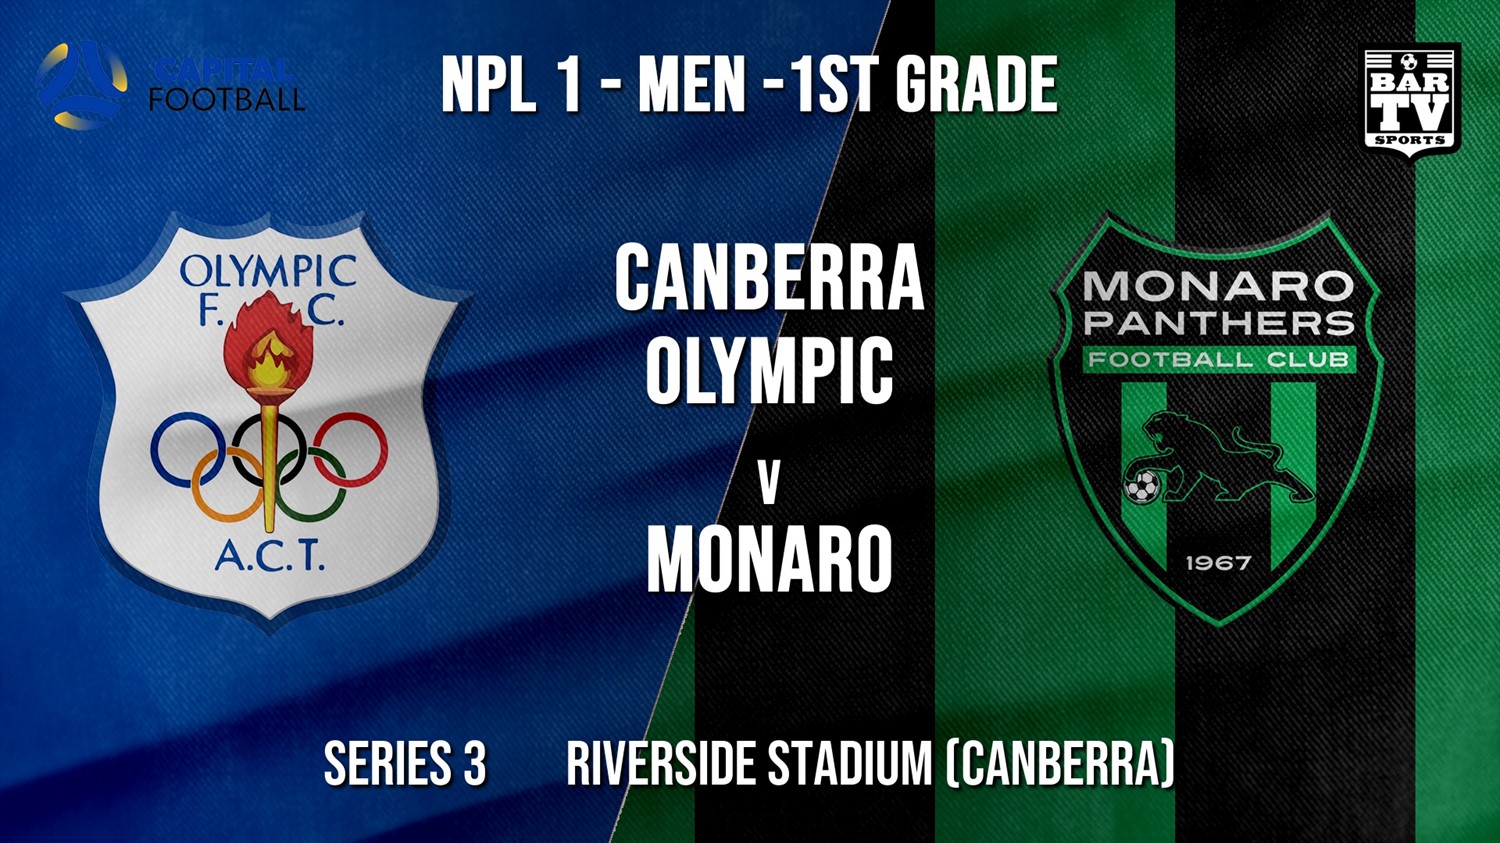 NPL - CAPITAL Series 3 - Canberra Olympic FC v Monaro Panthers FC Minigame Slate Image